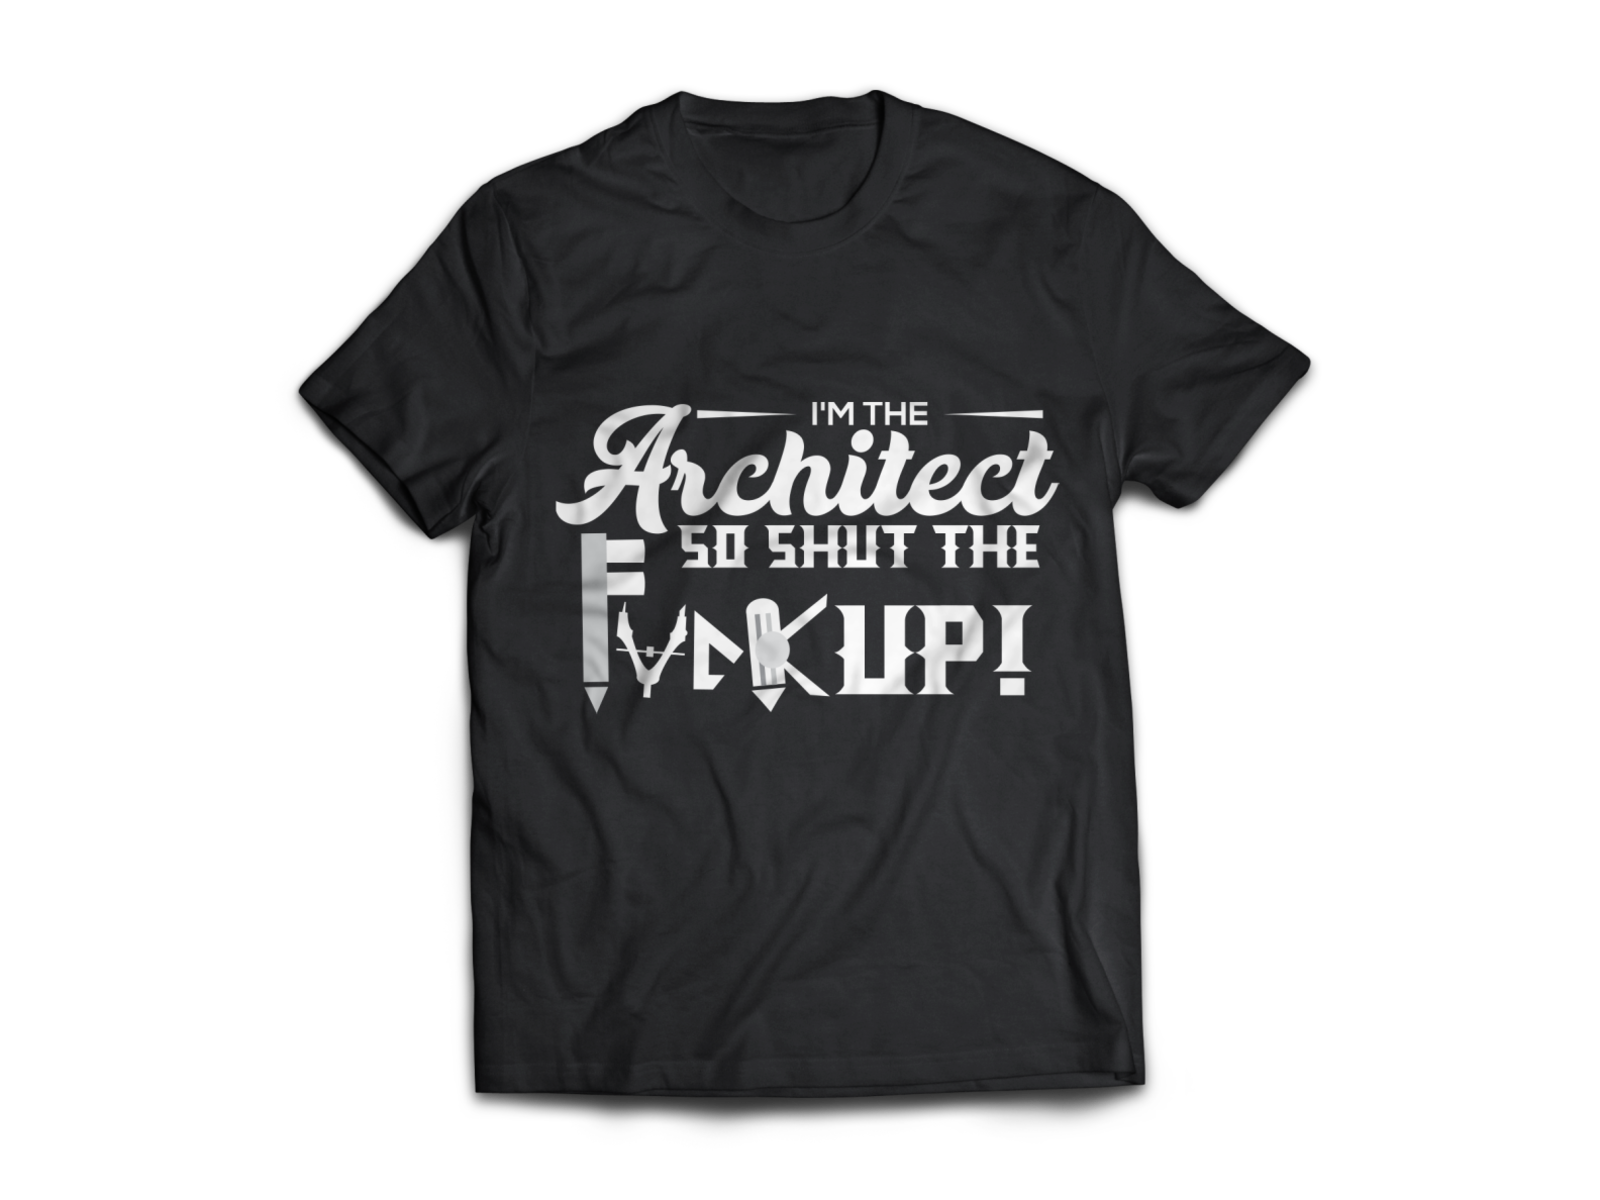 I'm the Architect, so shut the *#*# up! - Typography T Shirt Des design unique illustration funny typography t-shirt tshirt illustrator 2020 modern architect